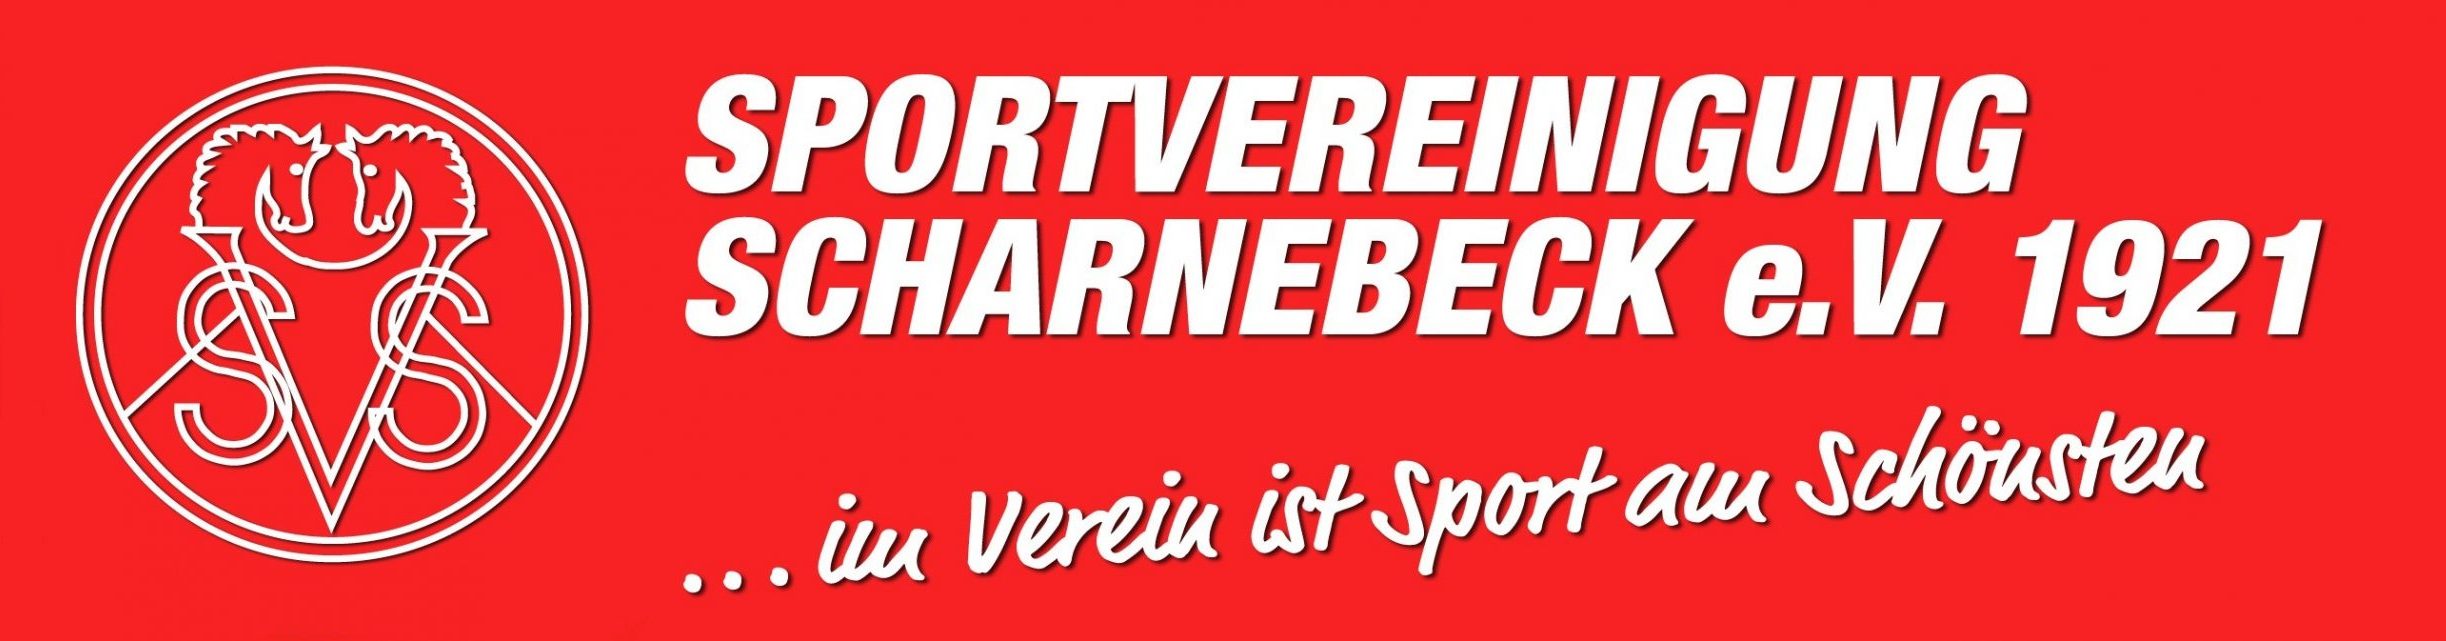 Sportvereinigung Scharnebeck e.V. 1921